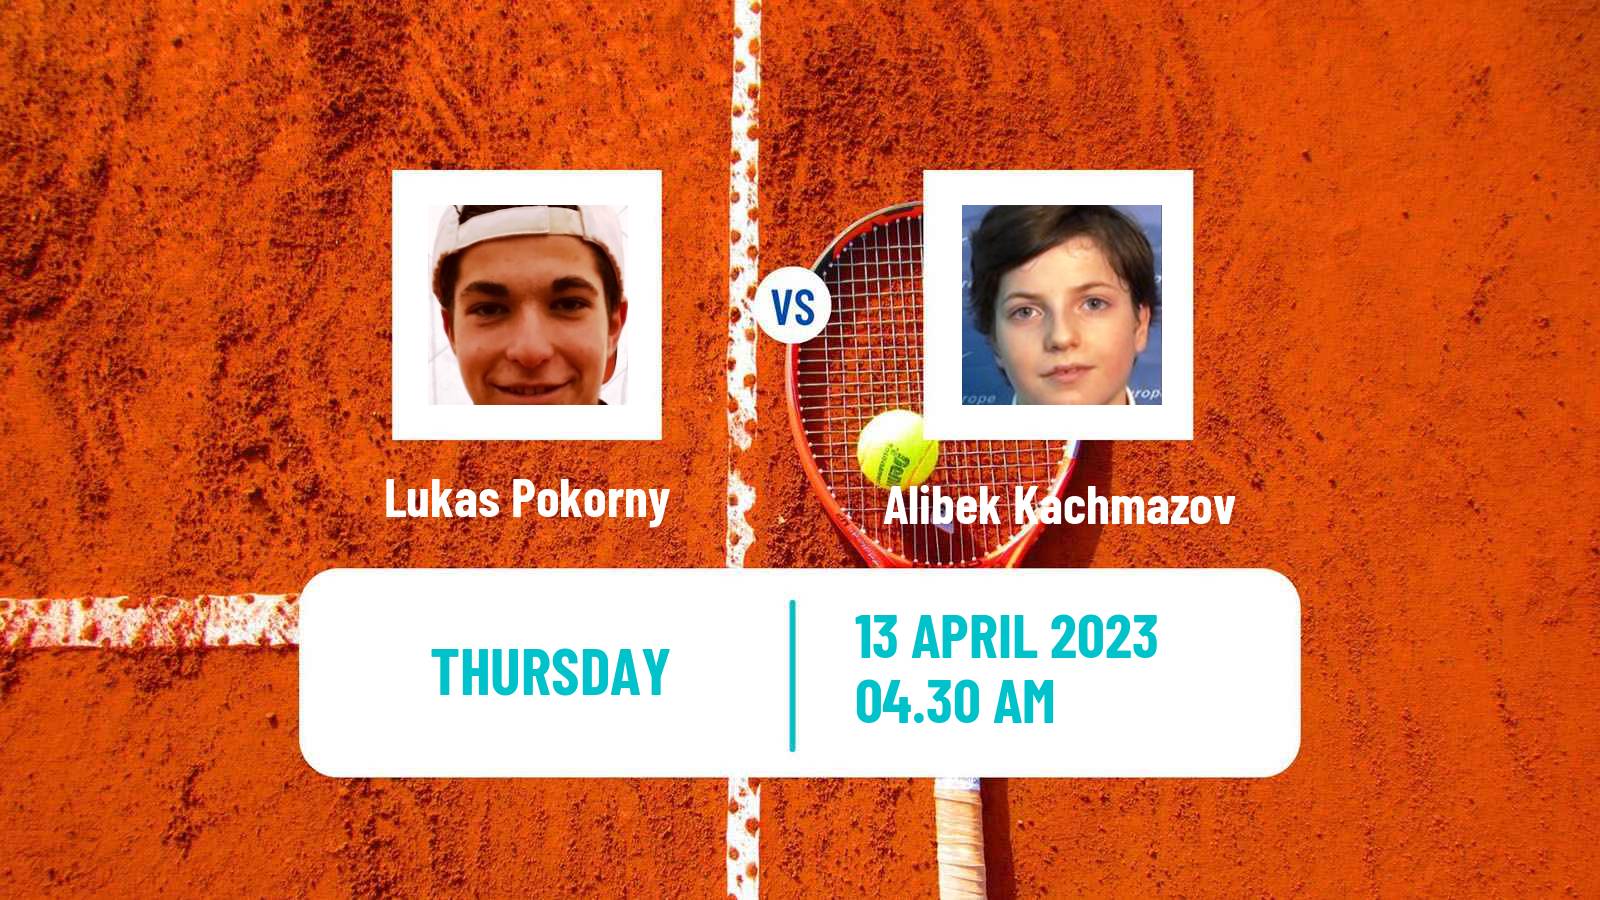 Tennis ITF Tournaments Lukas Pokorny - Alibek Kachmazov